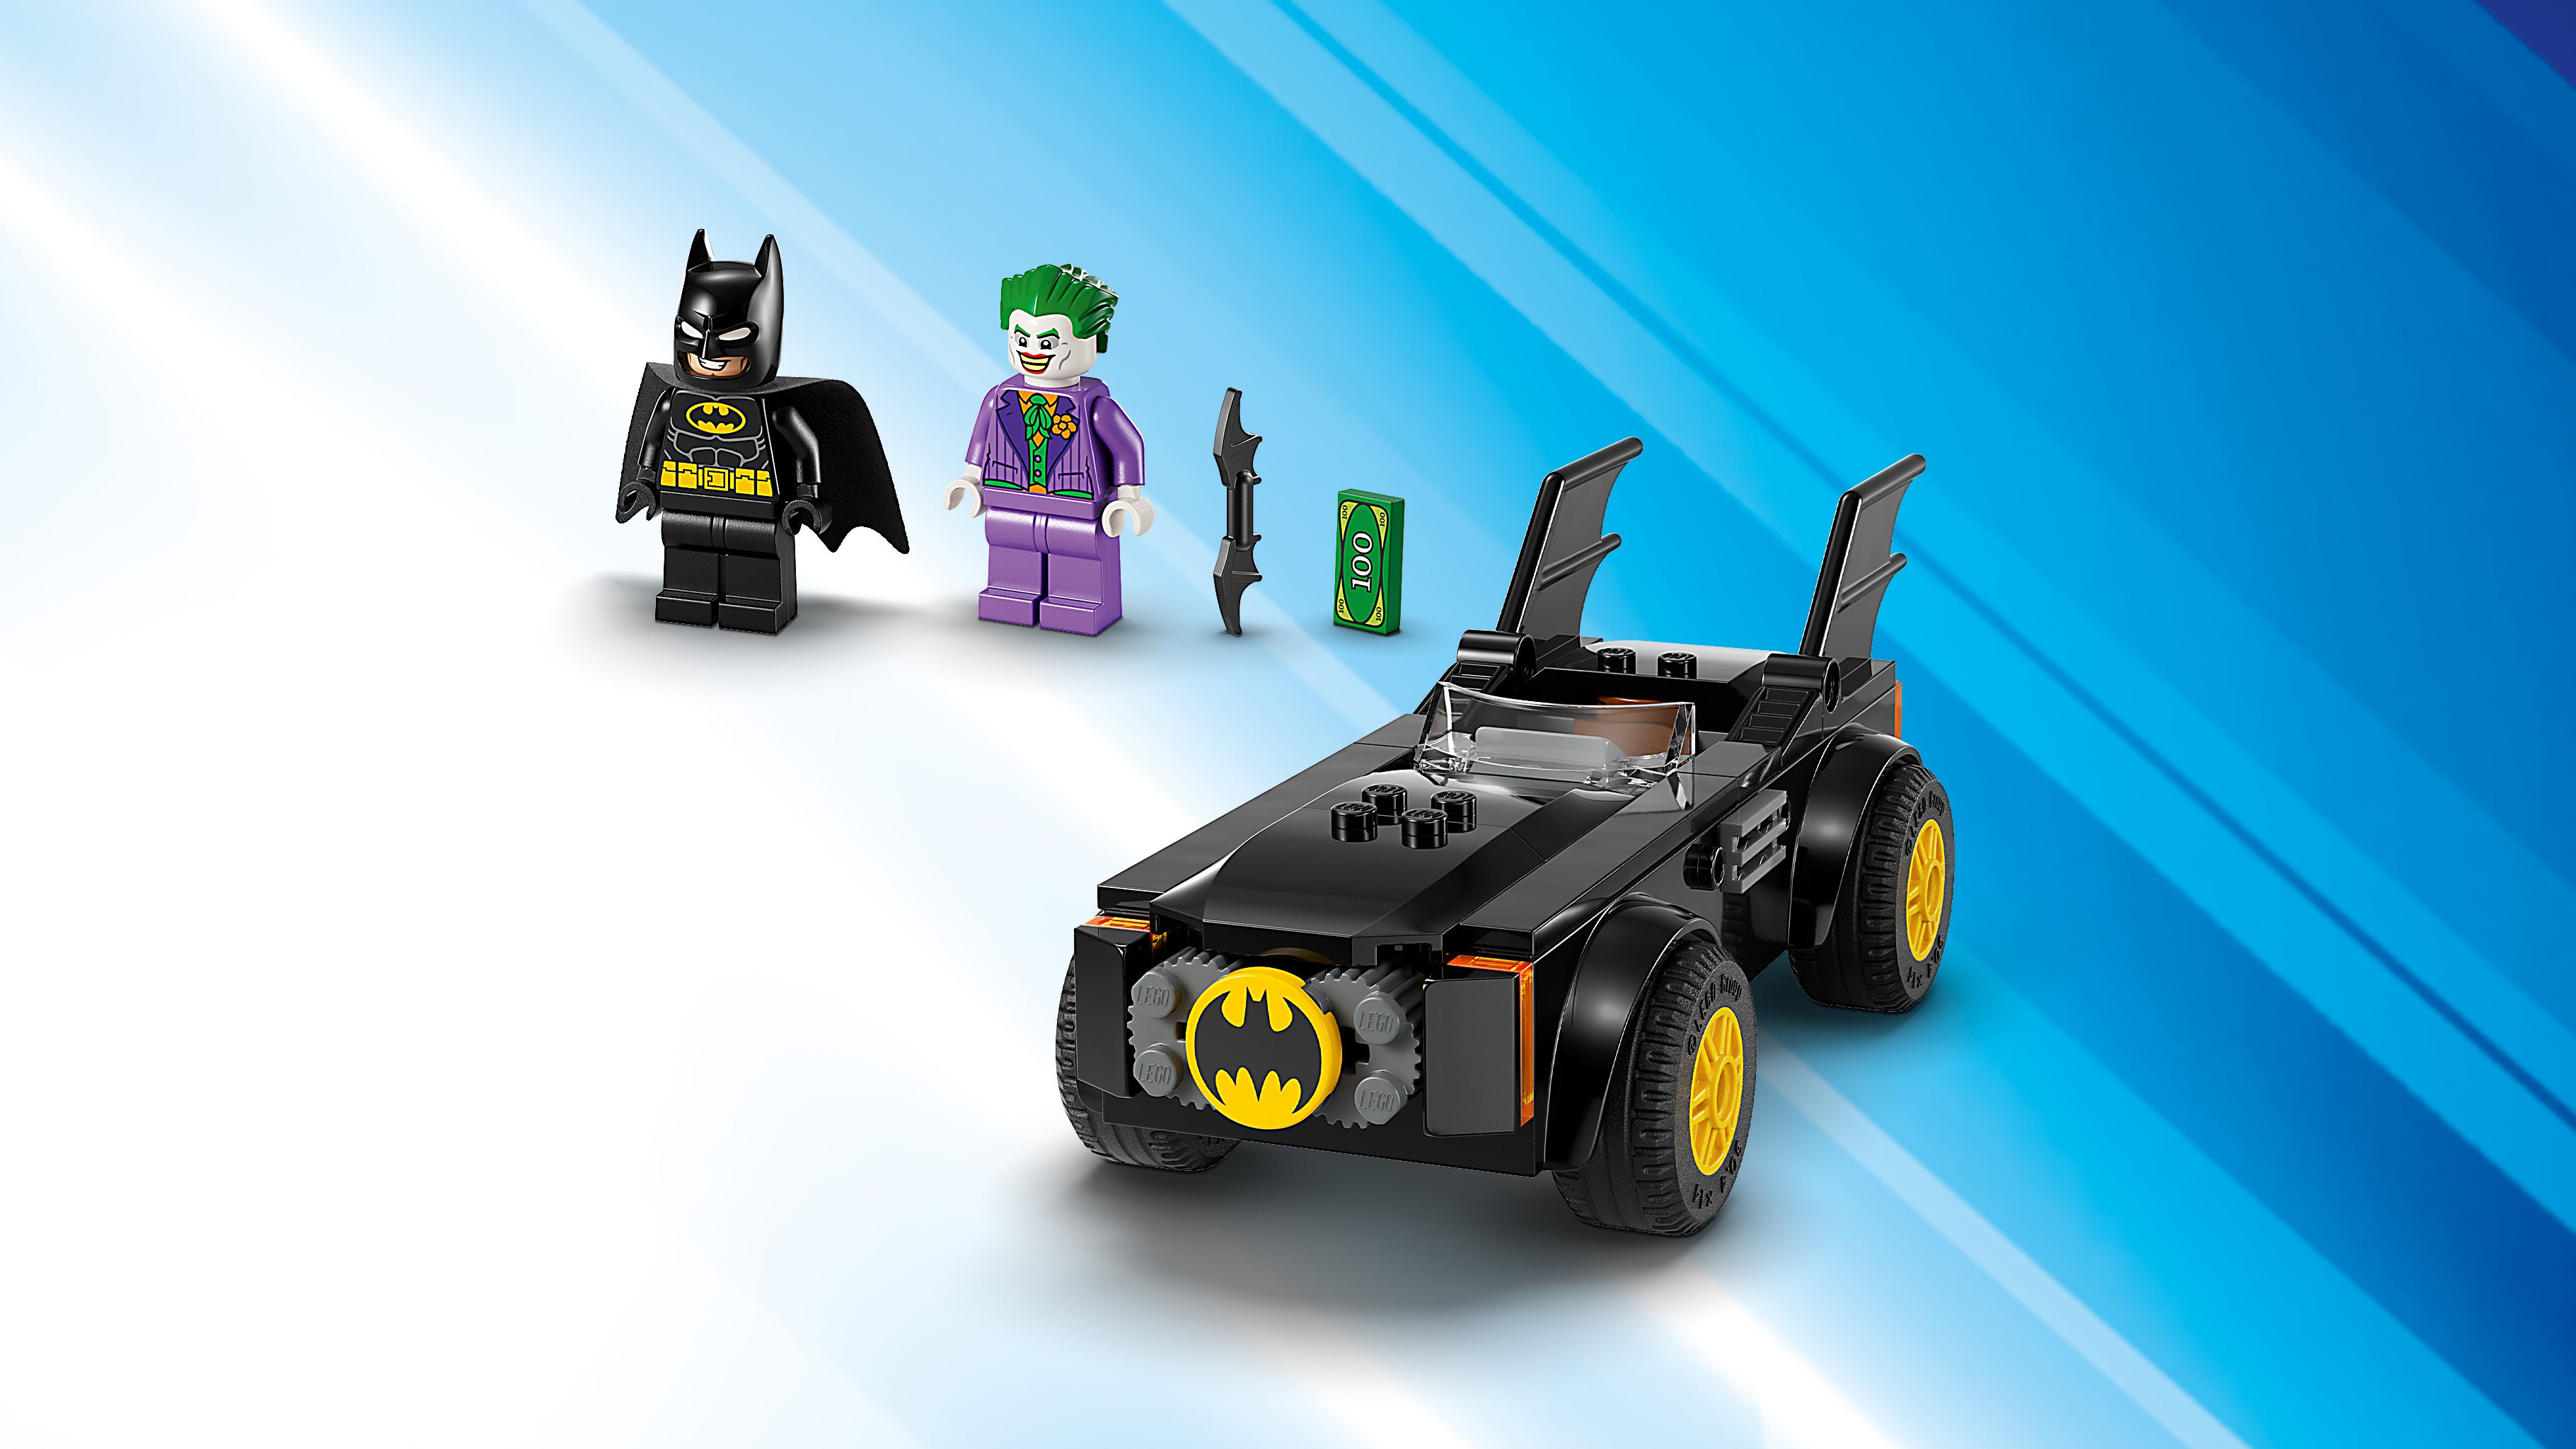 Lego 76264 Batmobile Pursuit Batman Vs The Joker